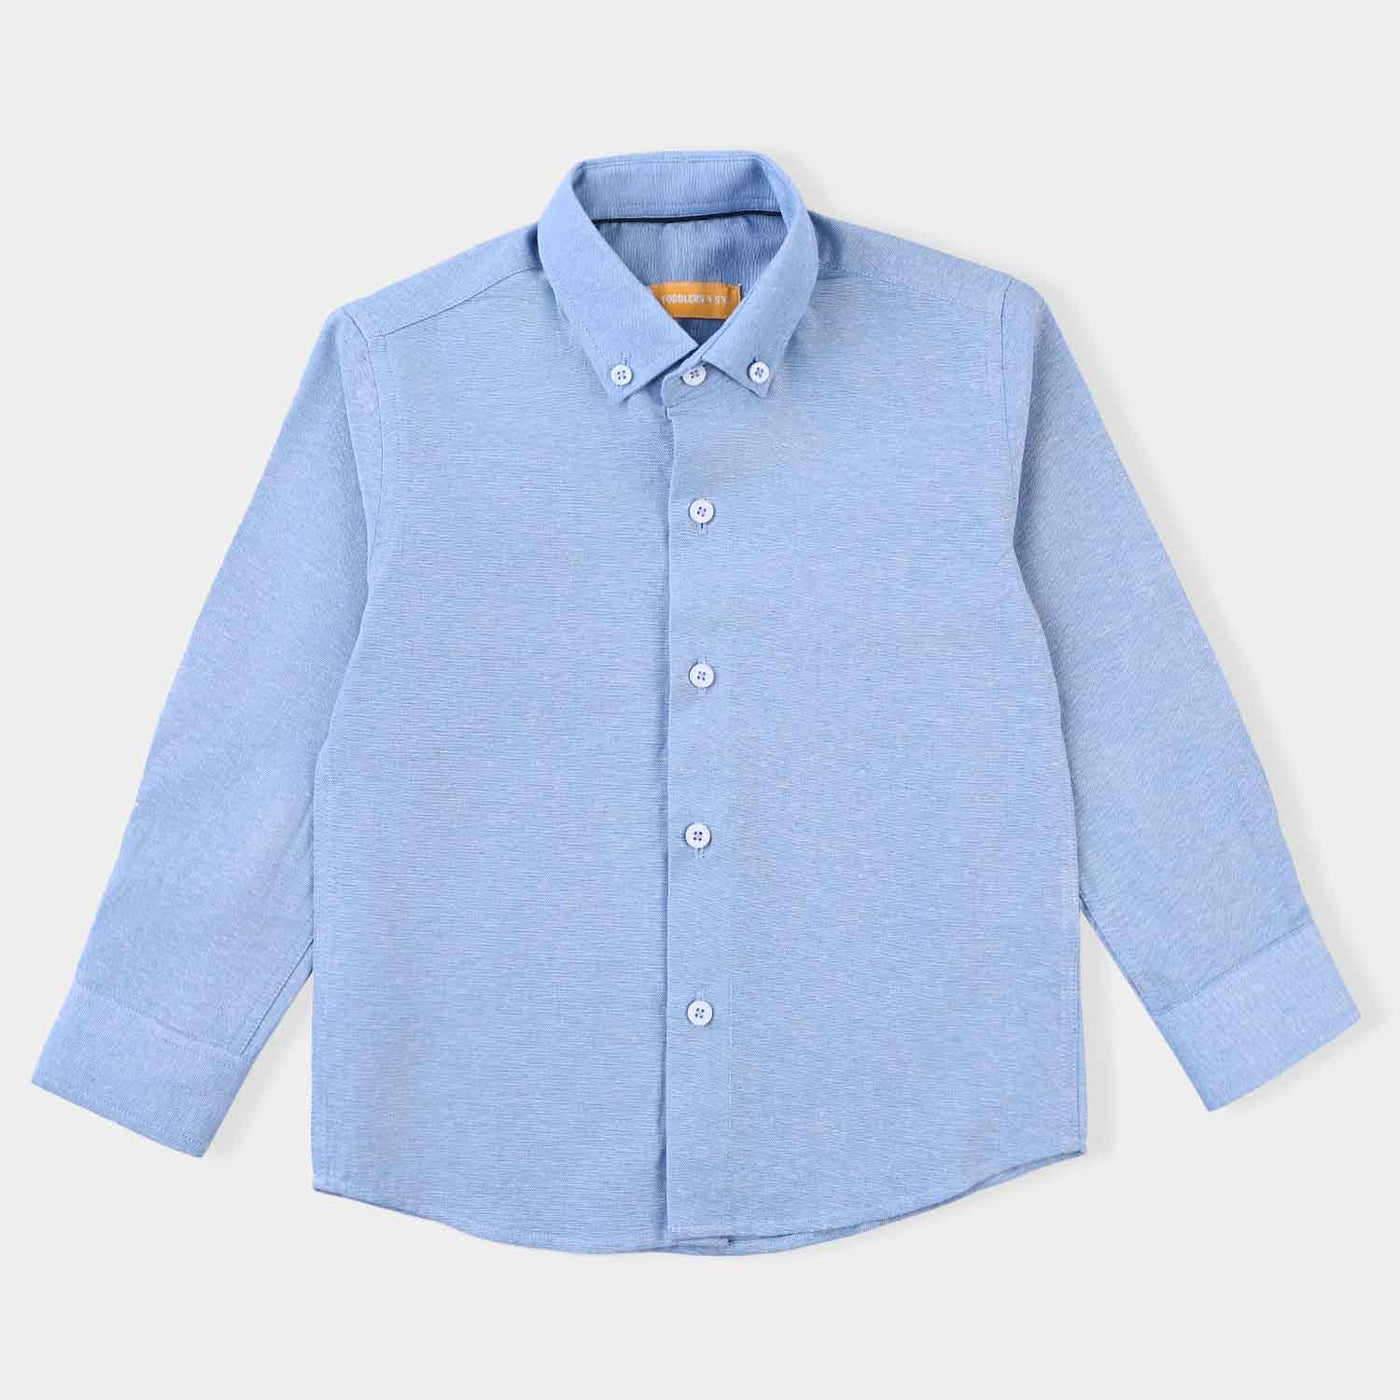 Boys Oxford Formal Shirt - Blue